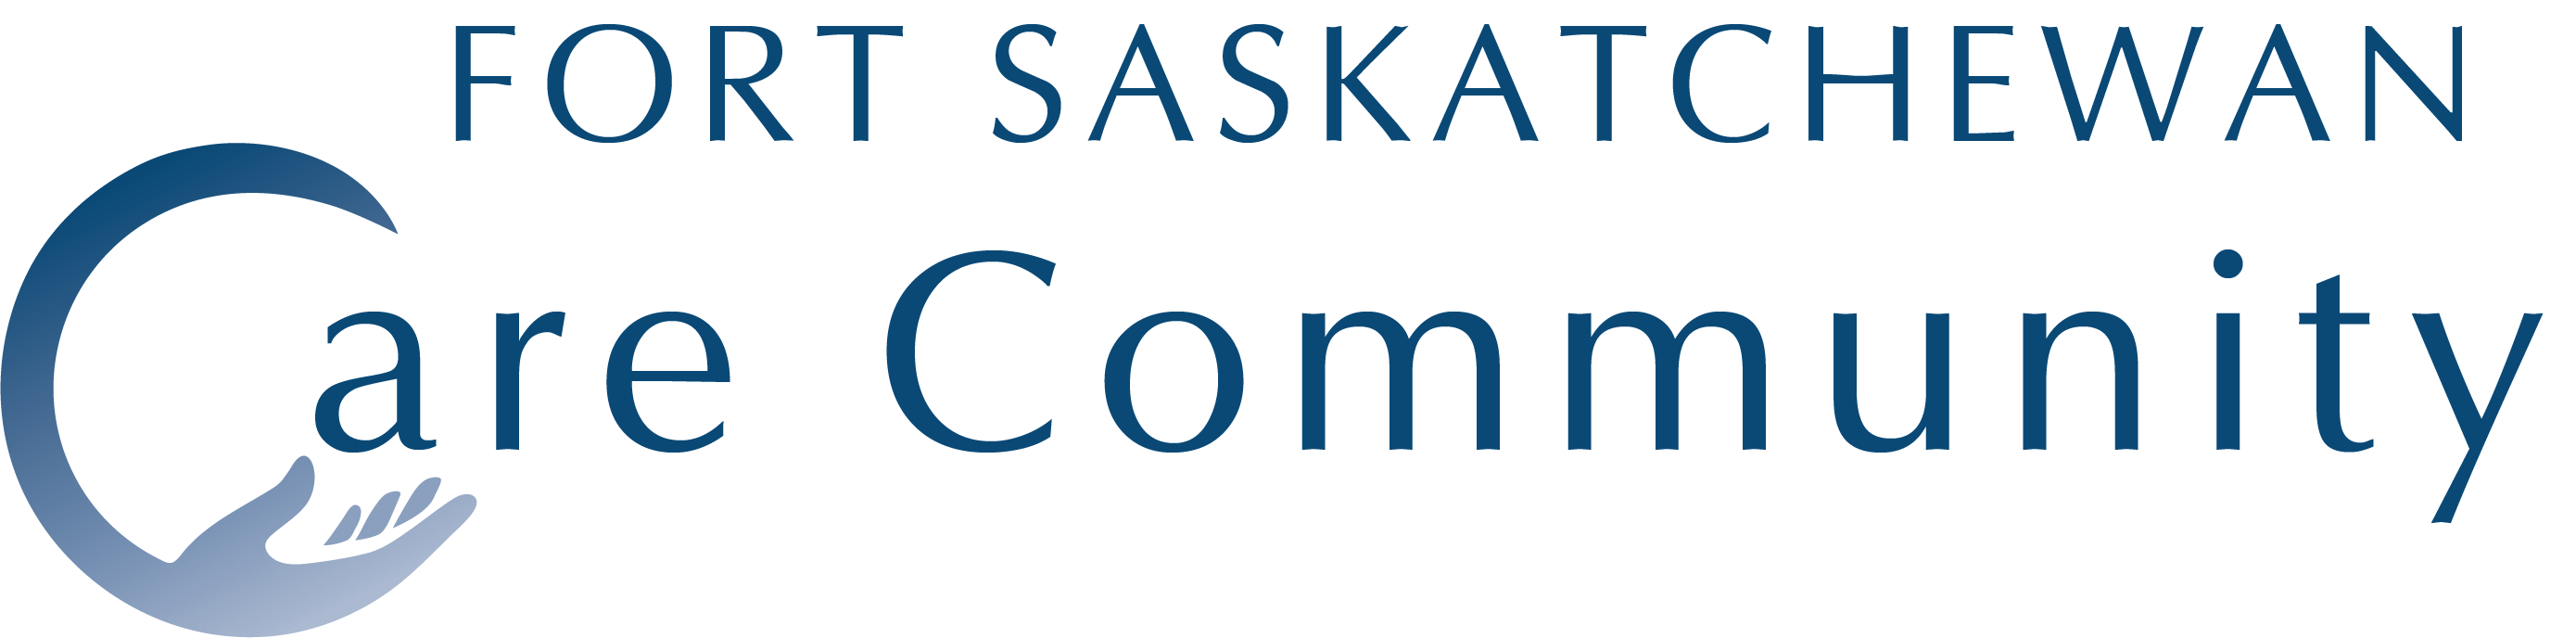 Fort Saskatchewan Care Community Logo